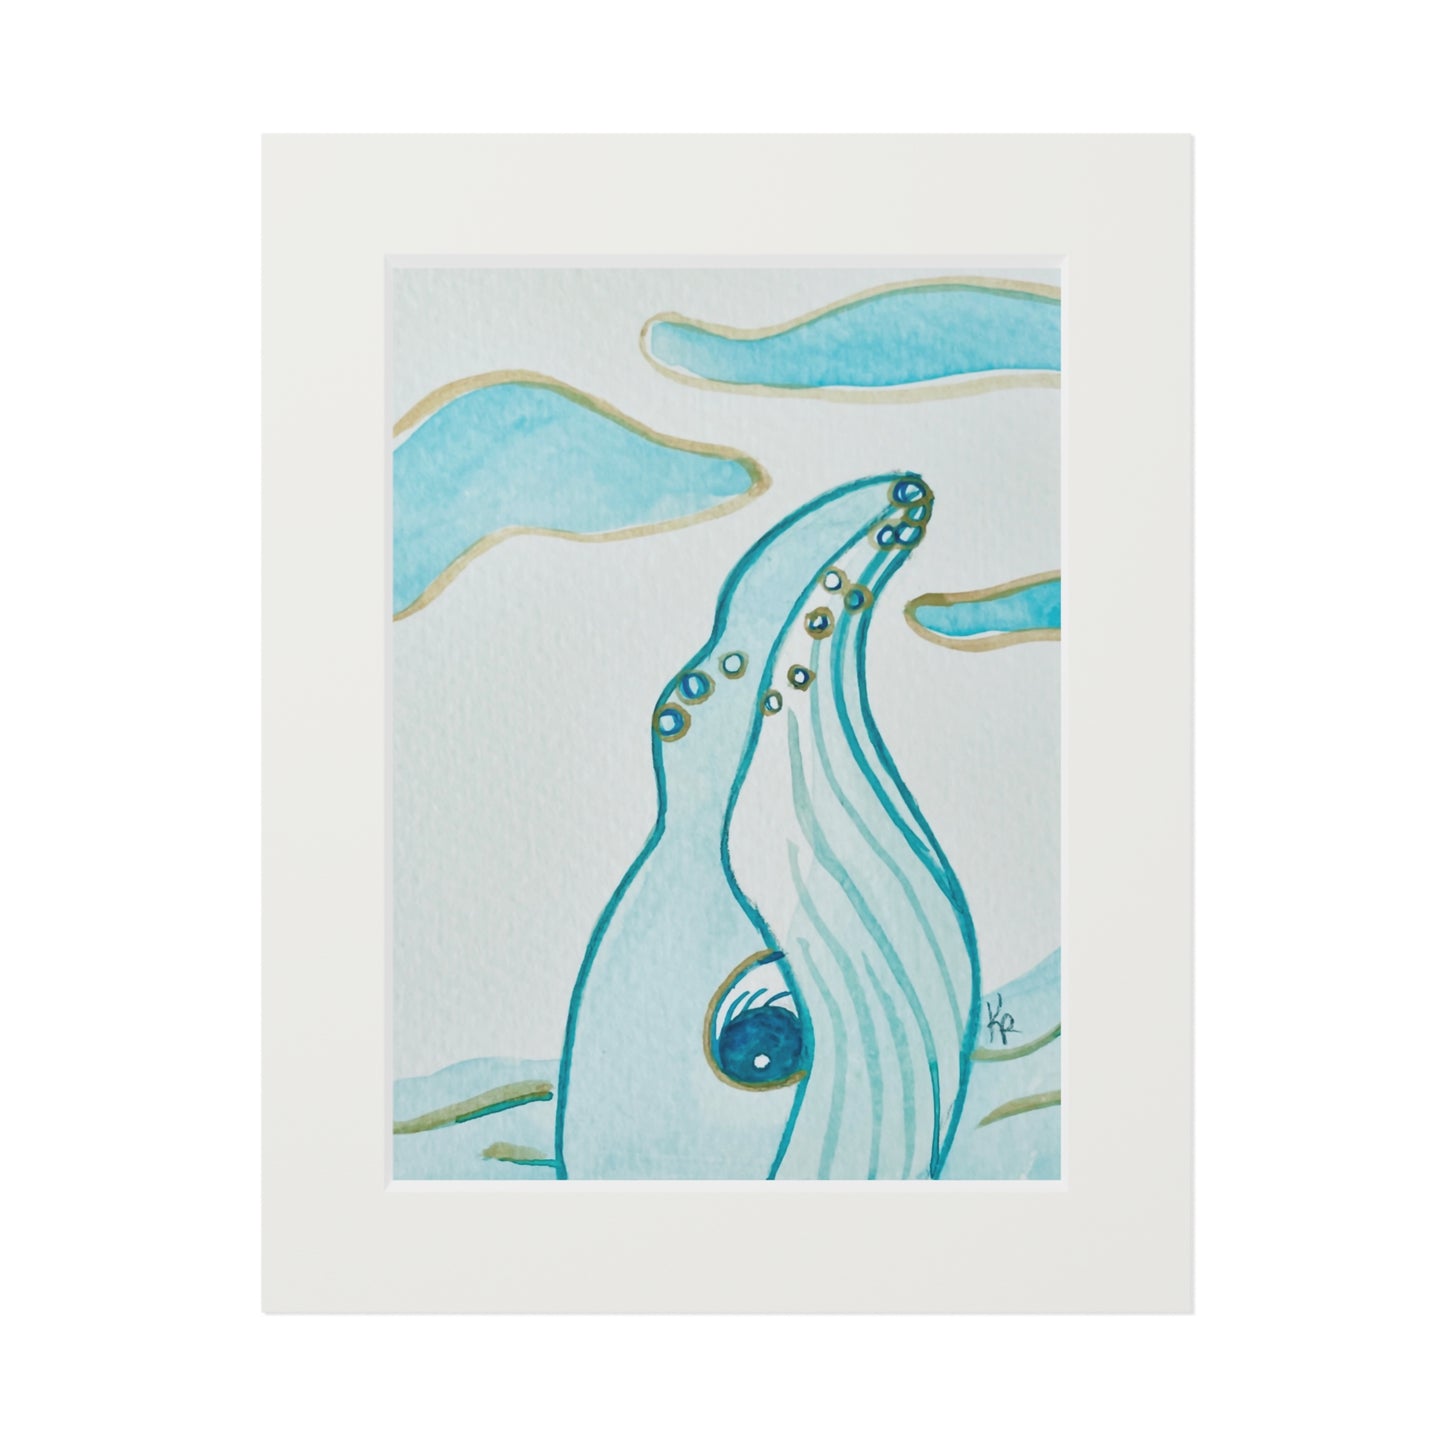 Dreamy Whale 11x14" Giclee Prints